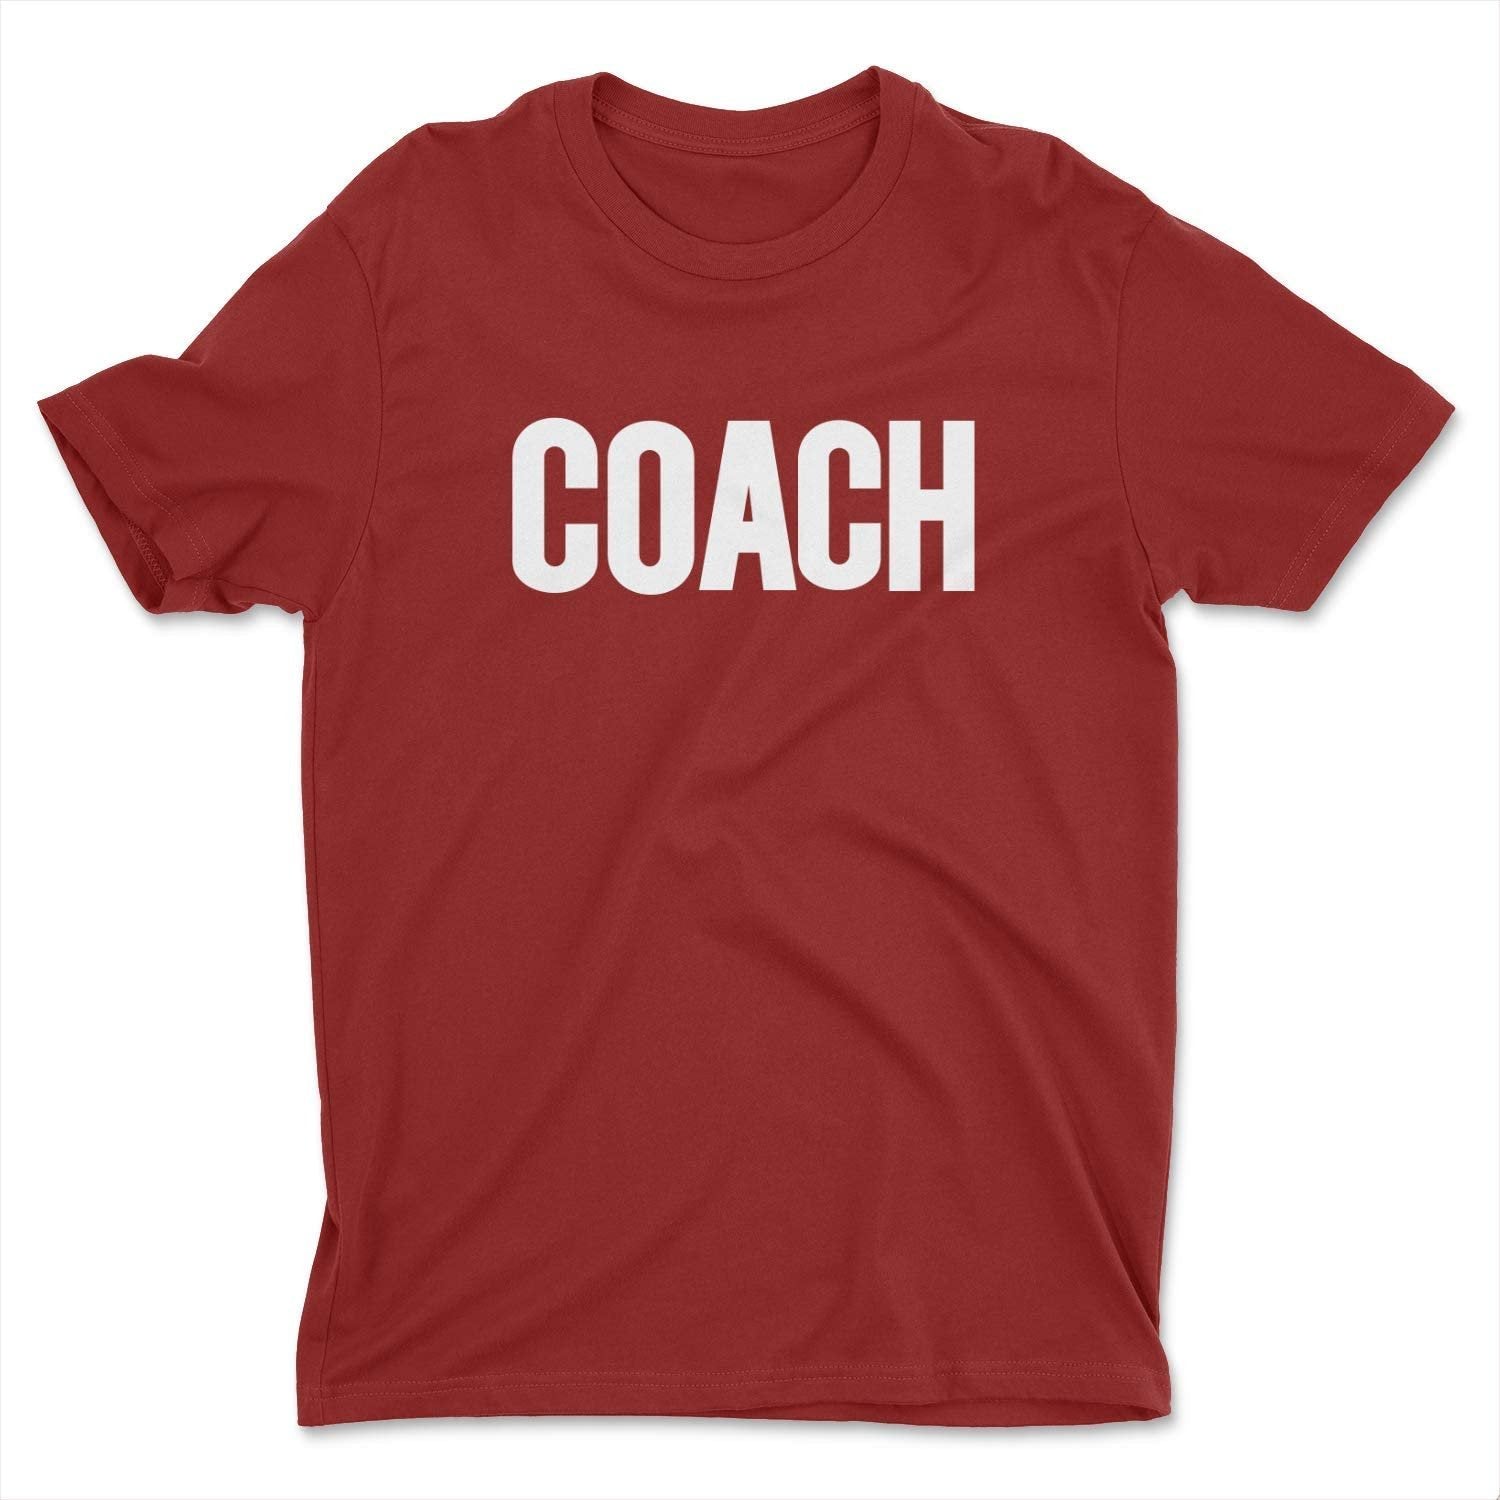 Coach Men's T-Shirt (Solid Design, Maroon & White)